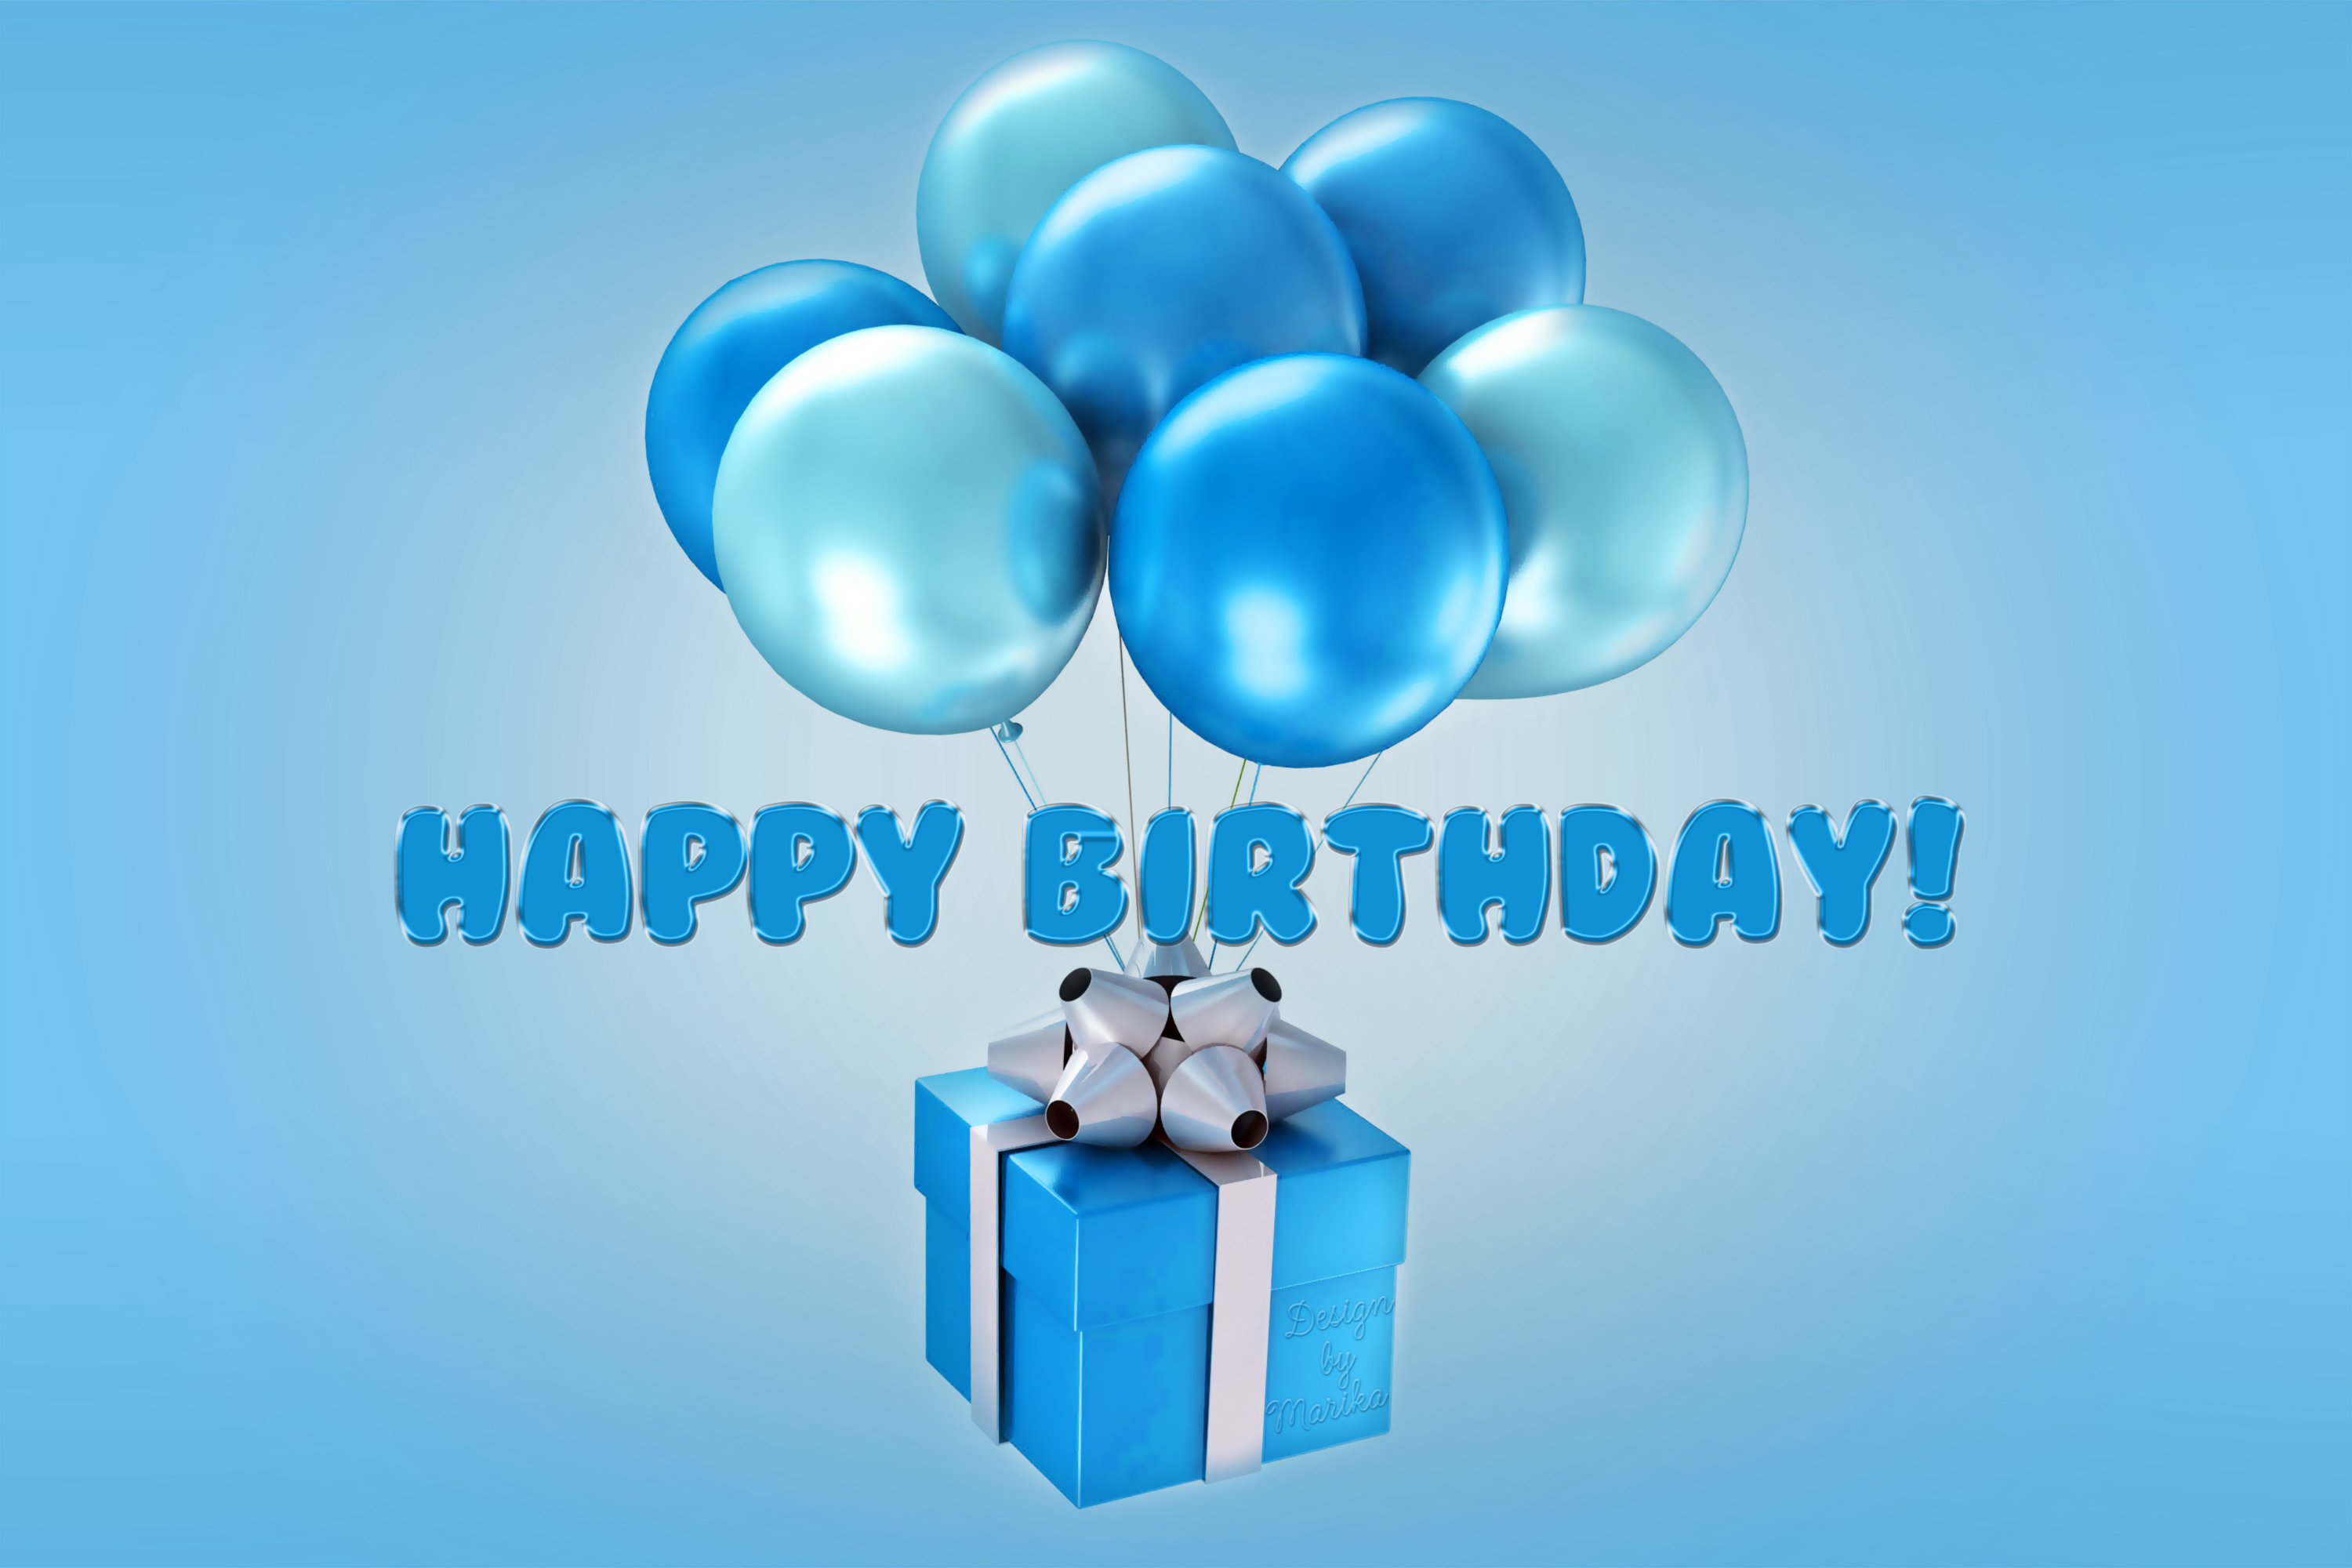 Blue Birthday Balloons Images - birthday balloons wallpaper stablebill